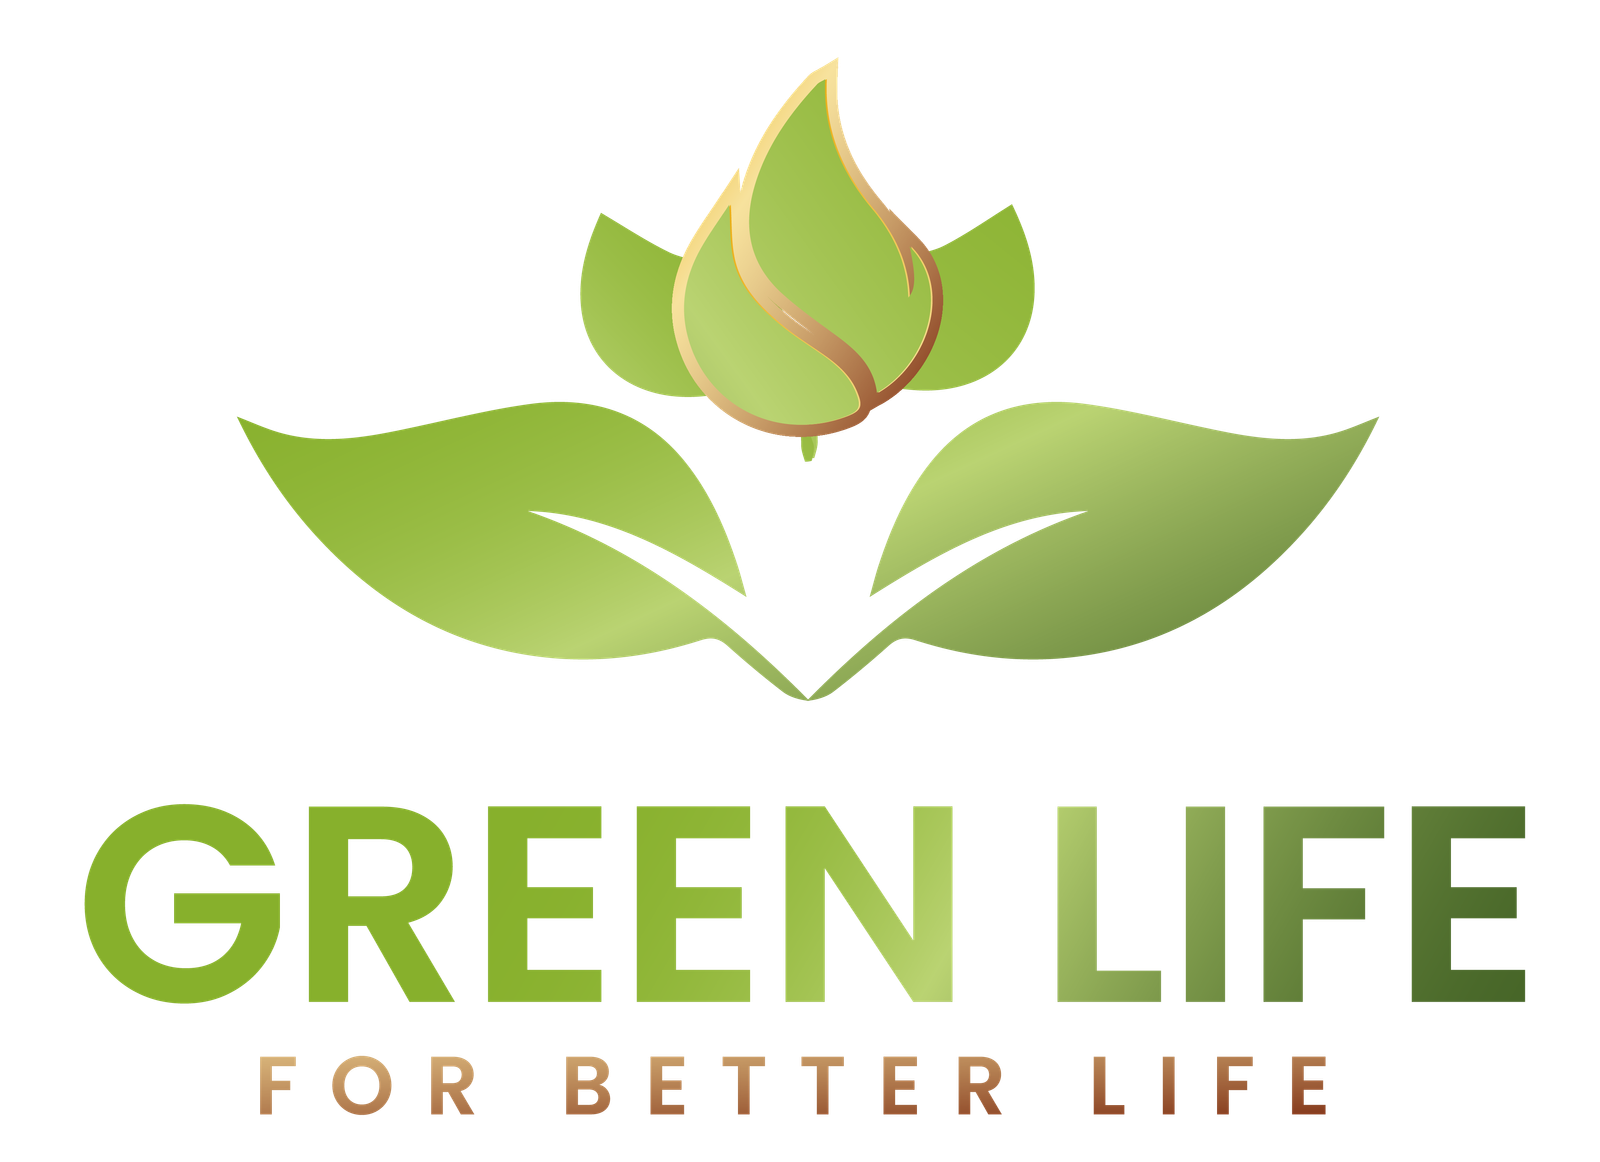 Greenlifeplantsnservices